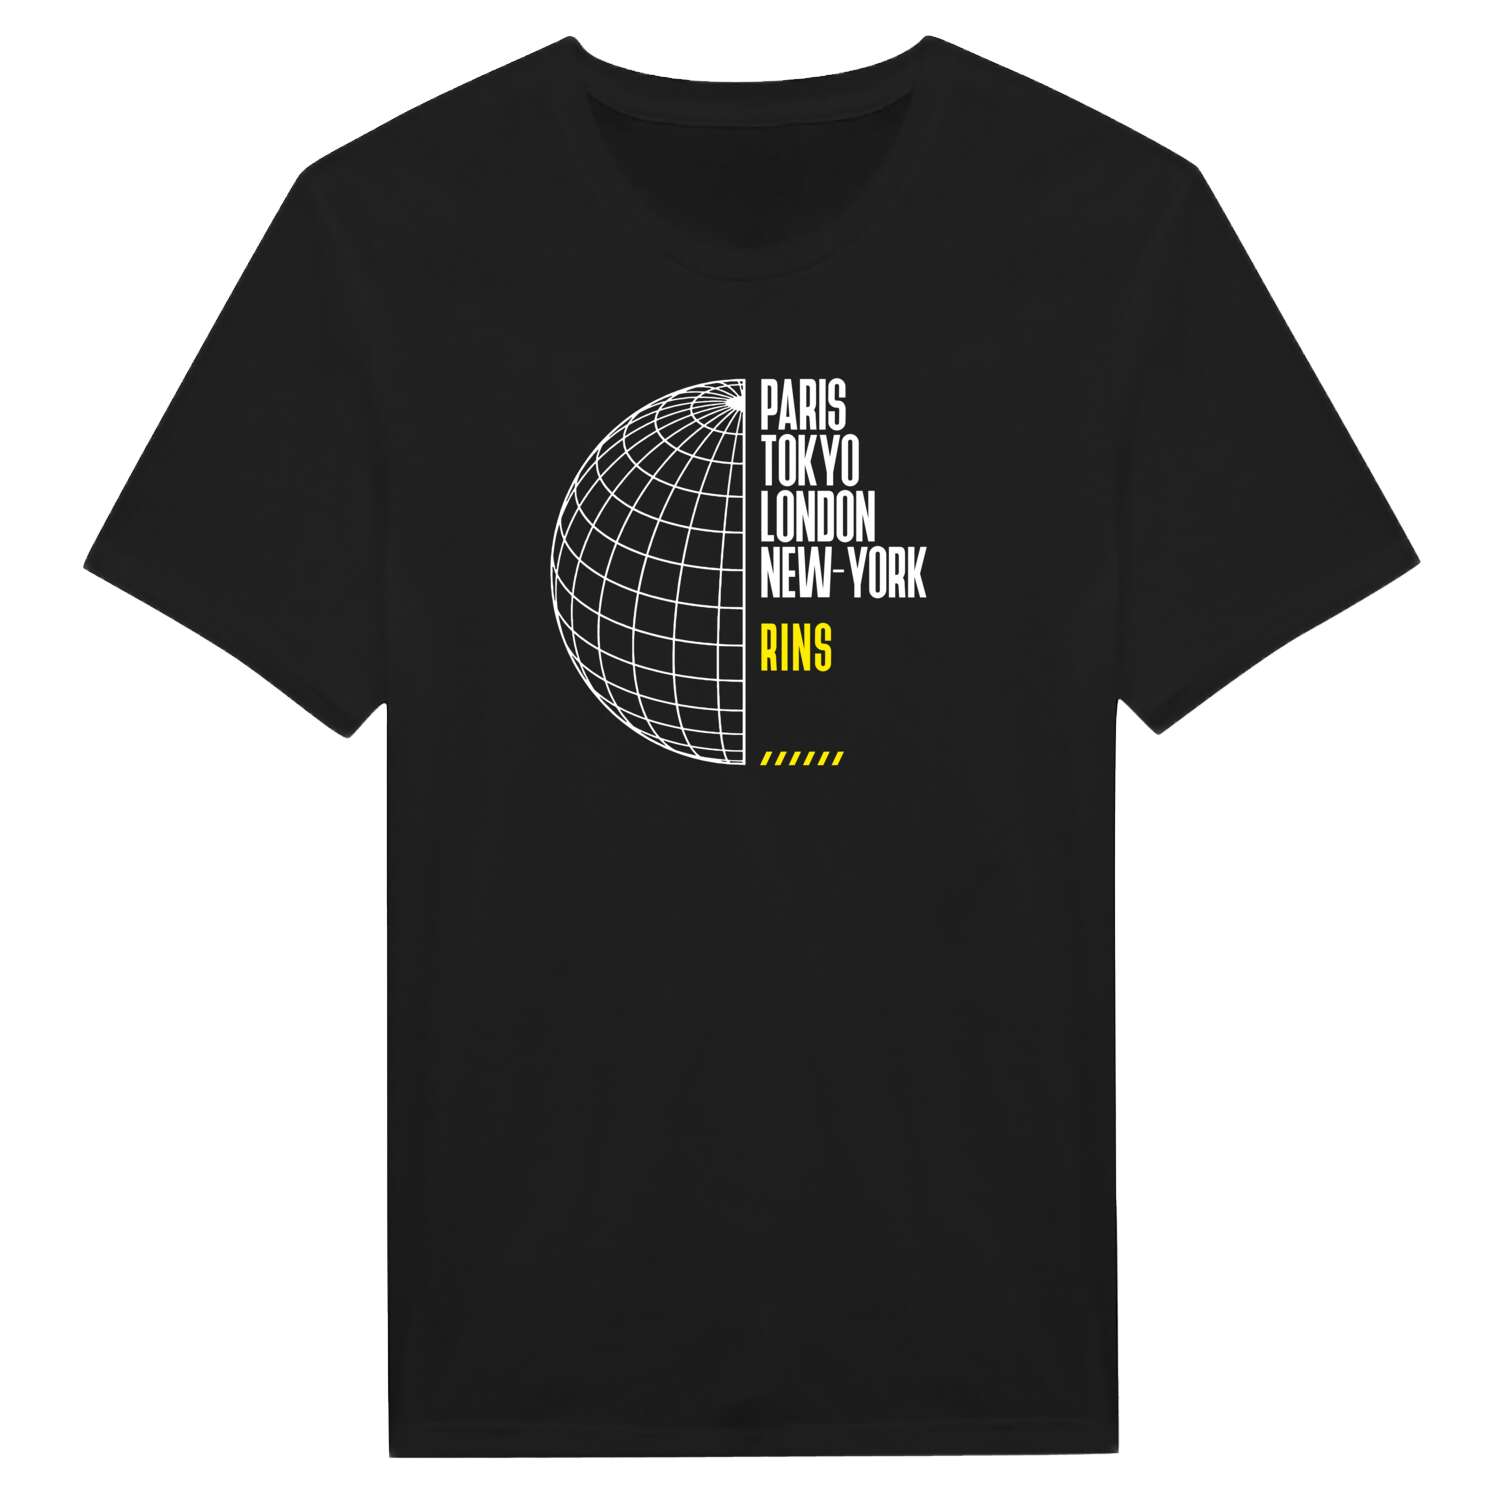 Rins T-Shirt »Paris Tokyo London«